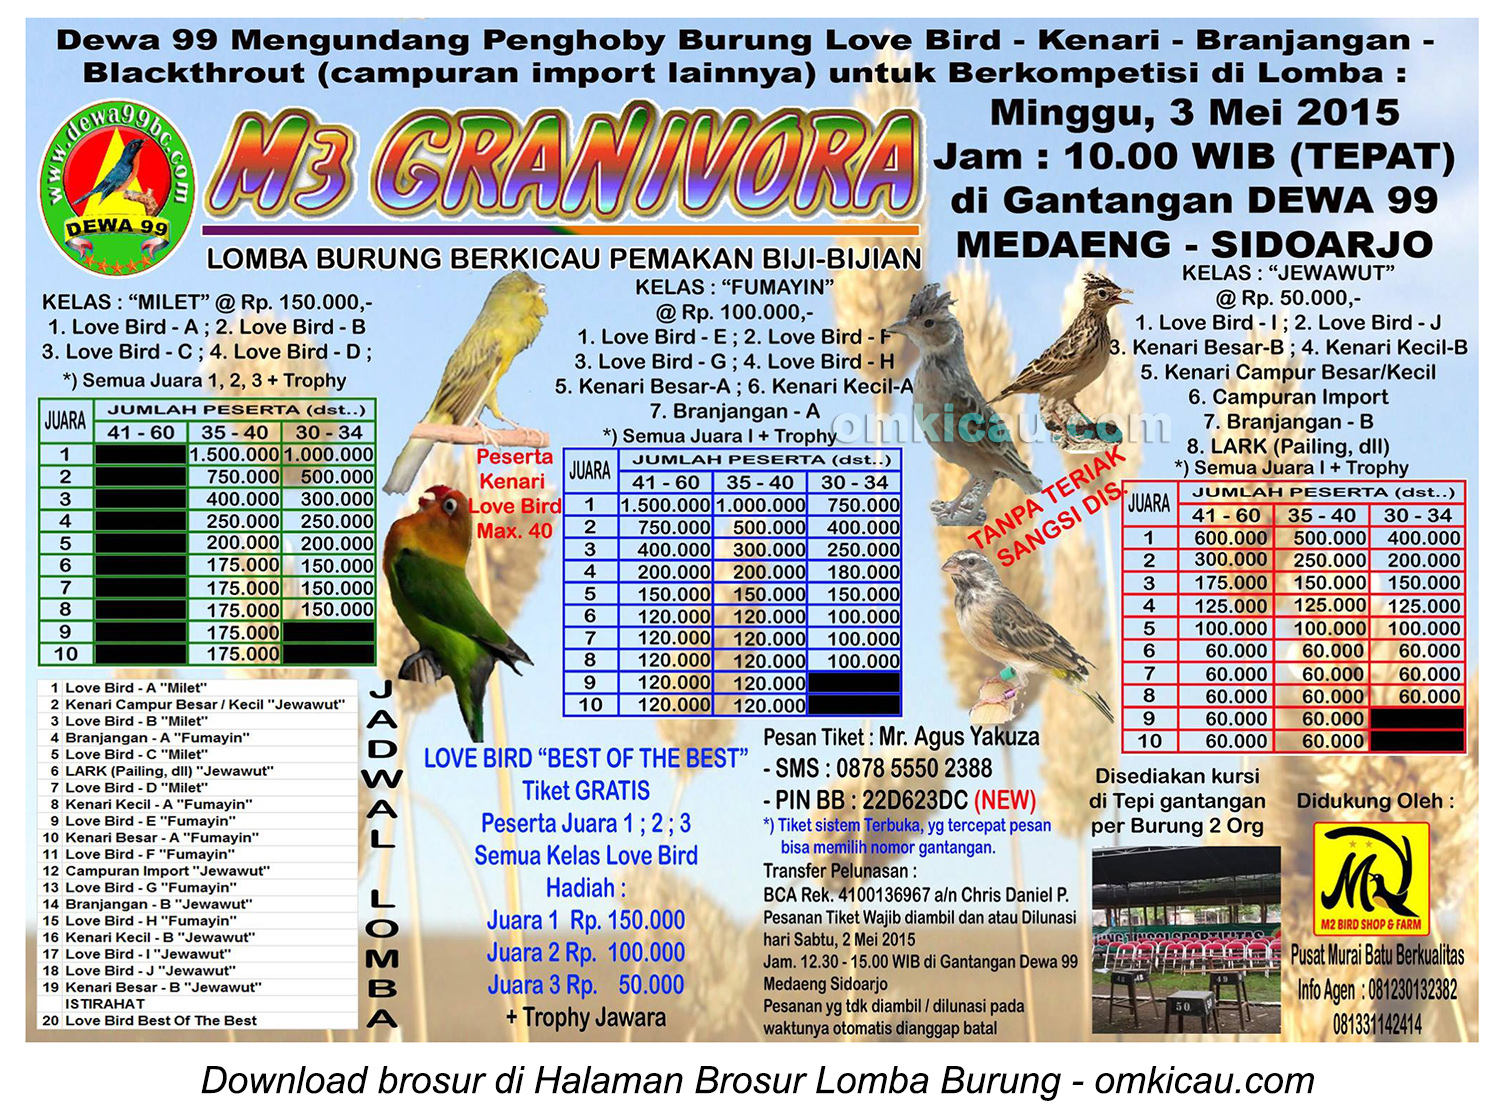 Brosur Lomba Burung Pemakan Bijian M3 Granivora, Sidoarjo, 3 Mei 2015